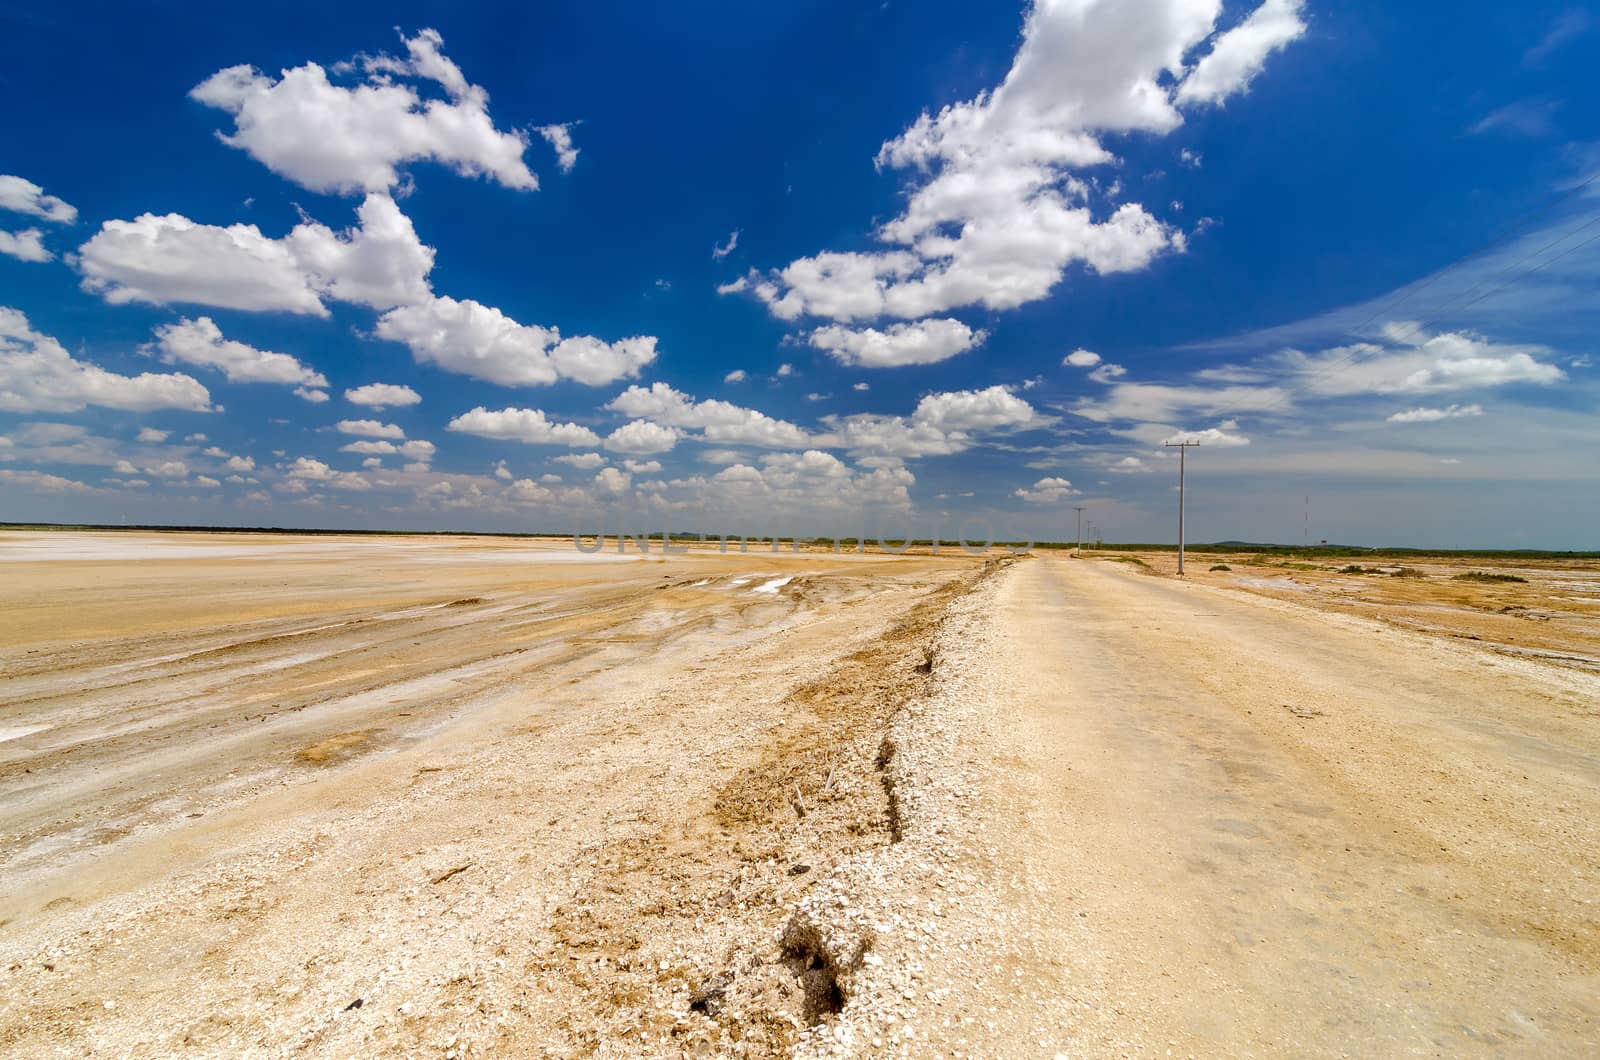 Dirt road passing through desert flatlands in La Guajira, Colombia